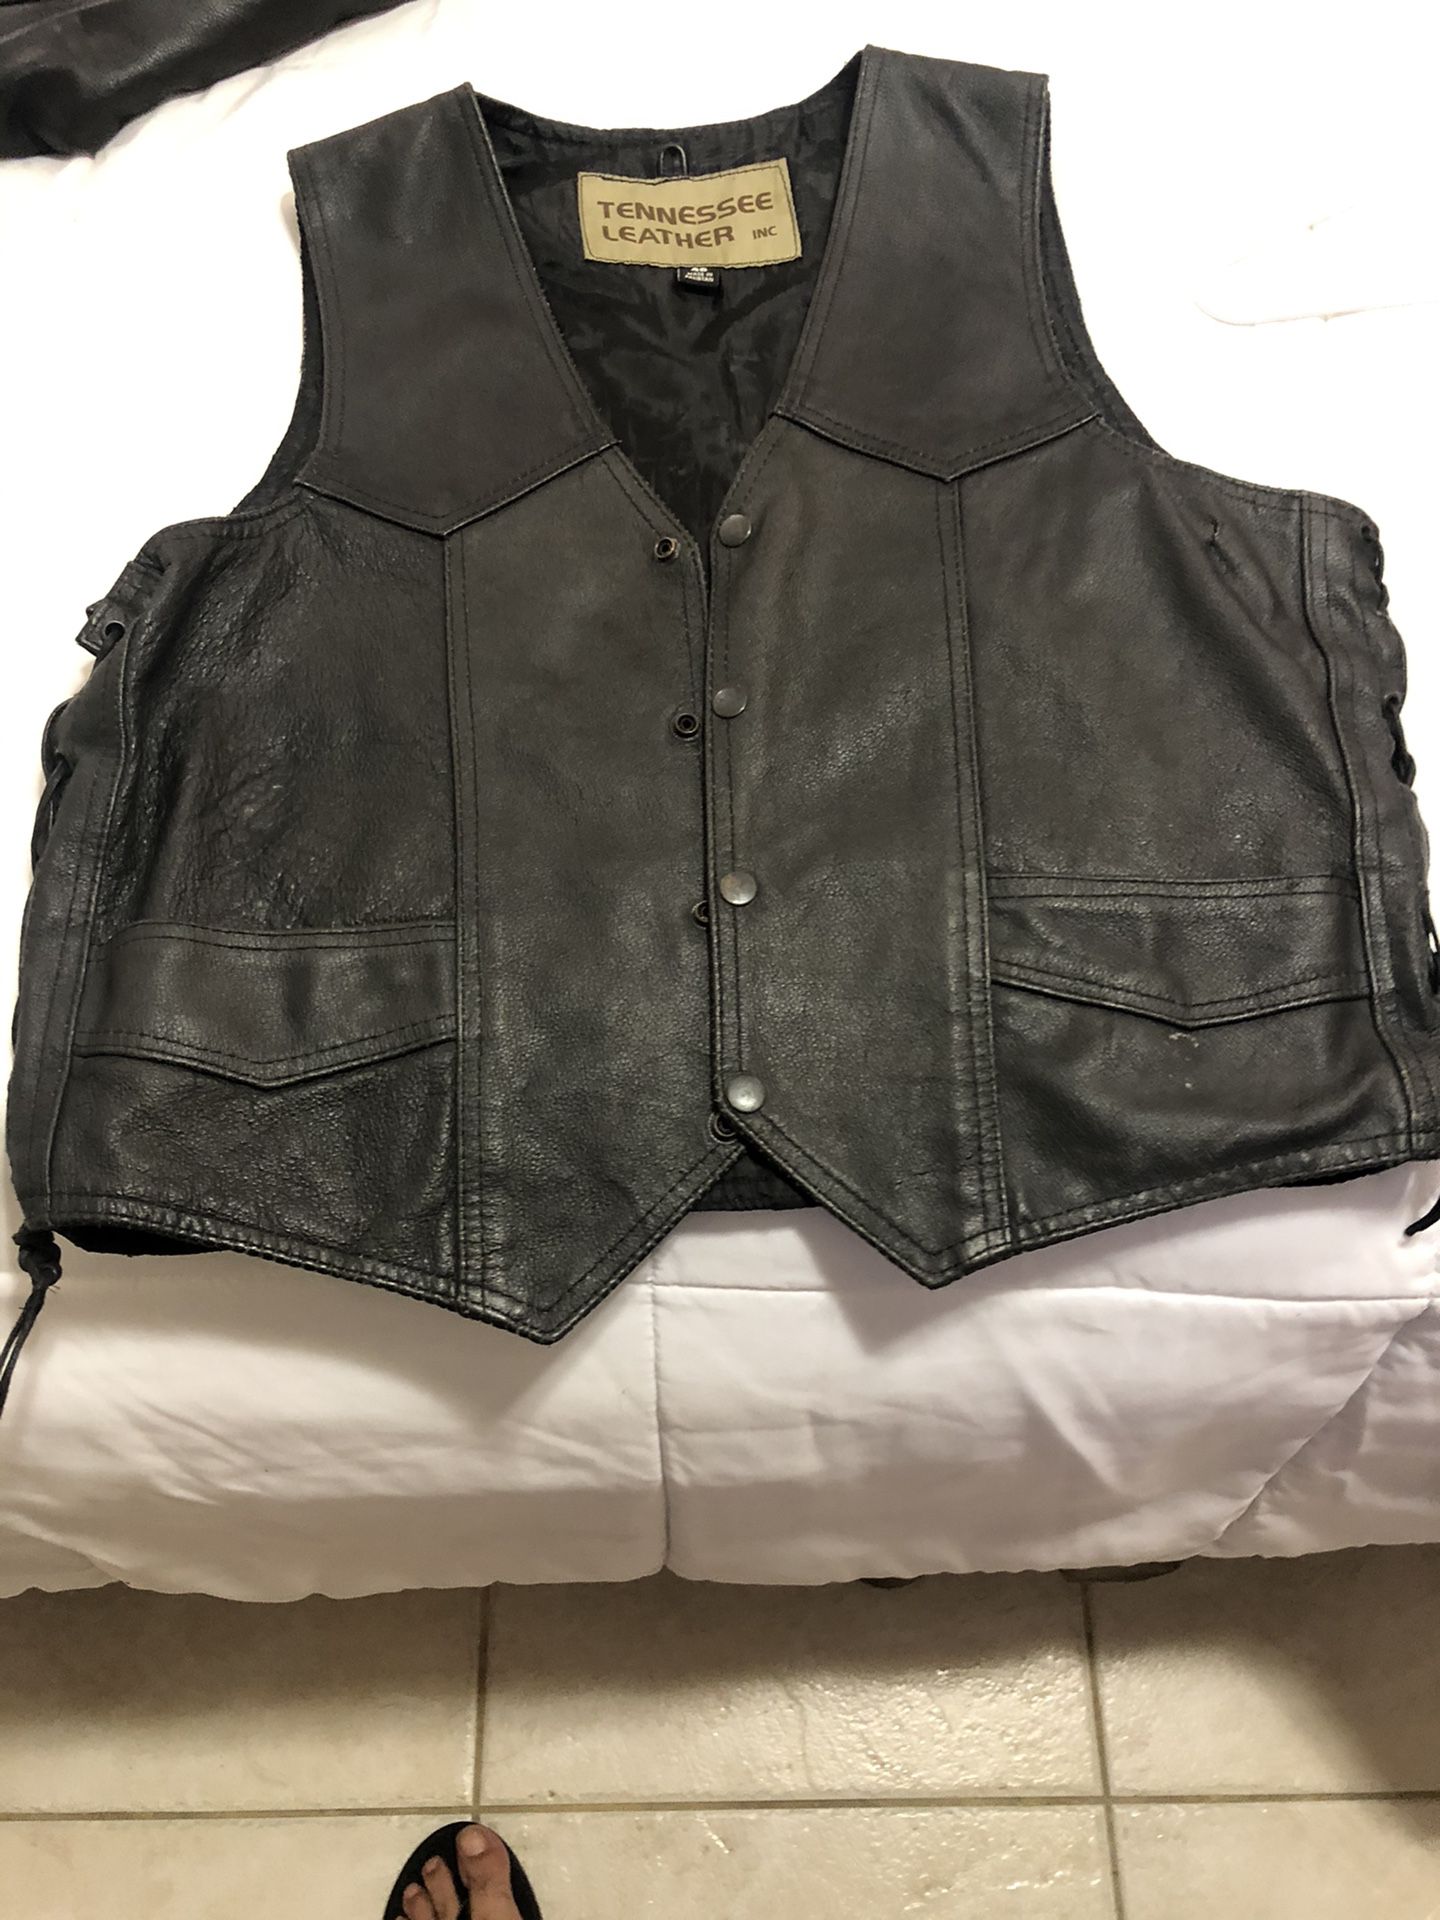 Leather vest$20